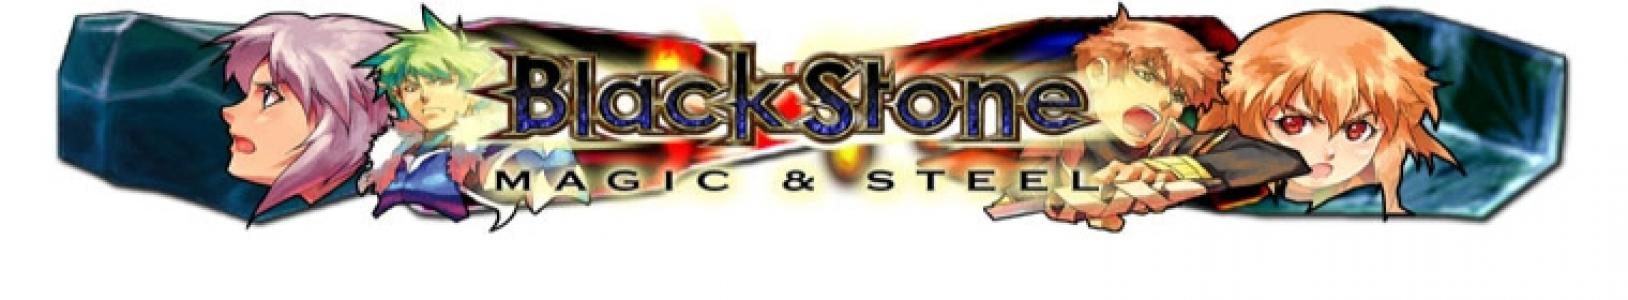 Black Stone: Magic & Steel banner